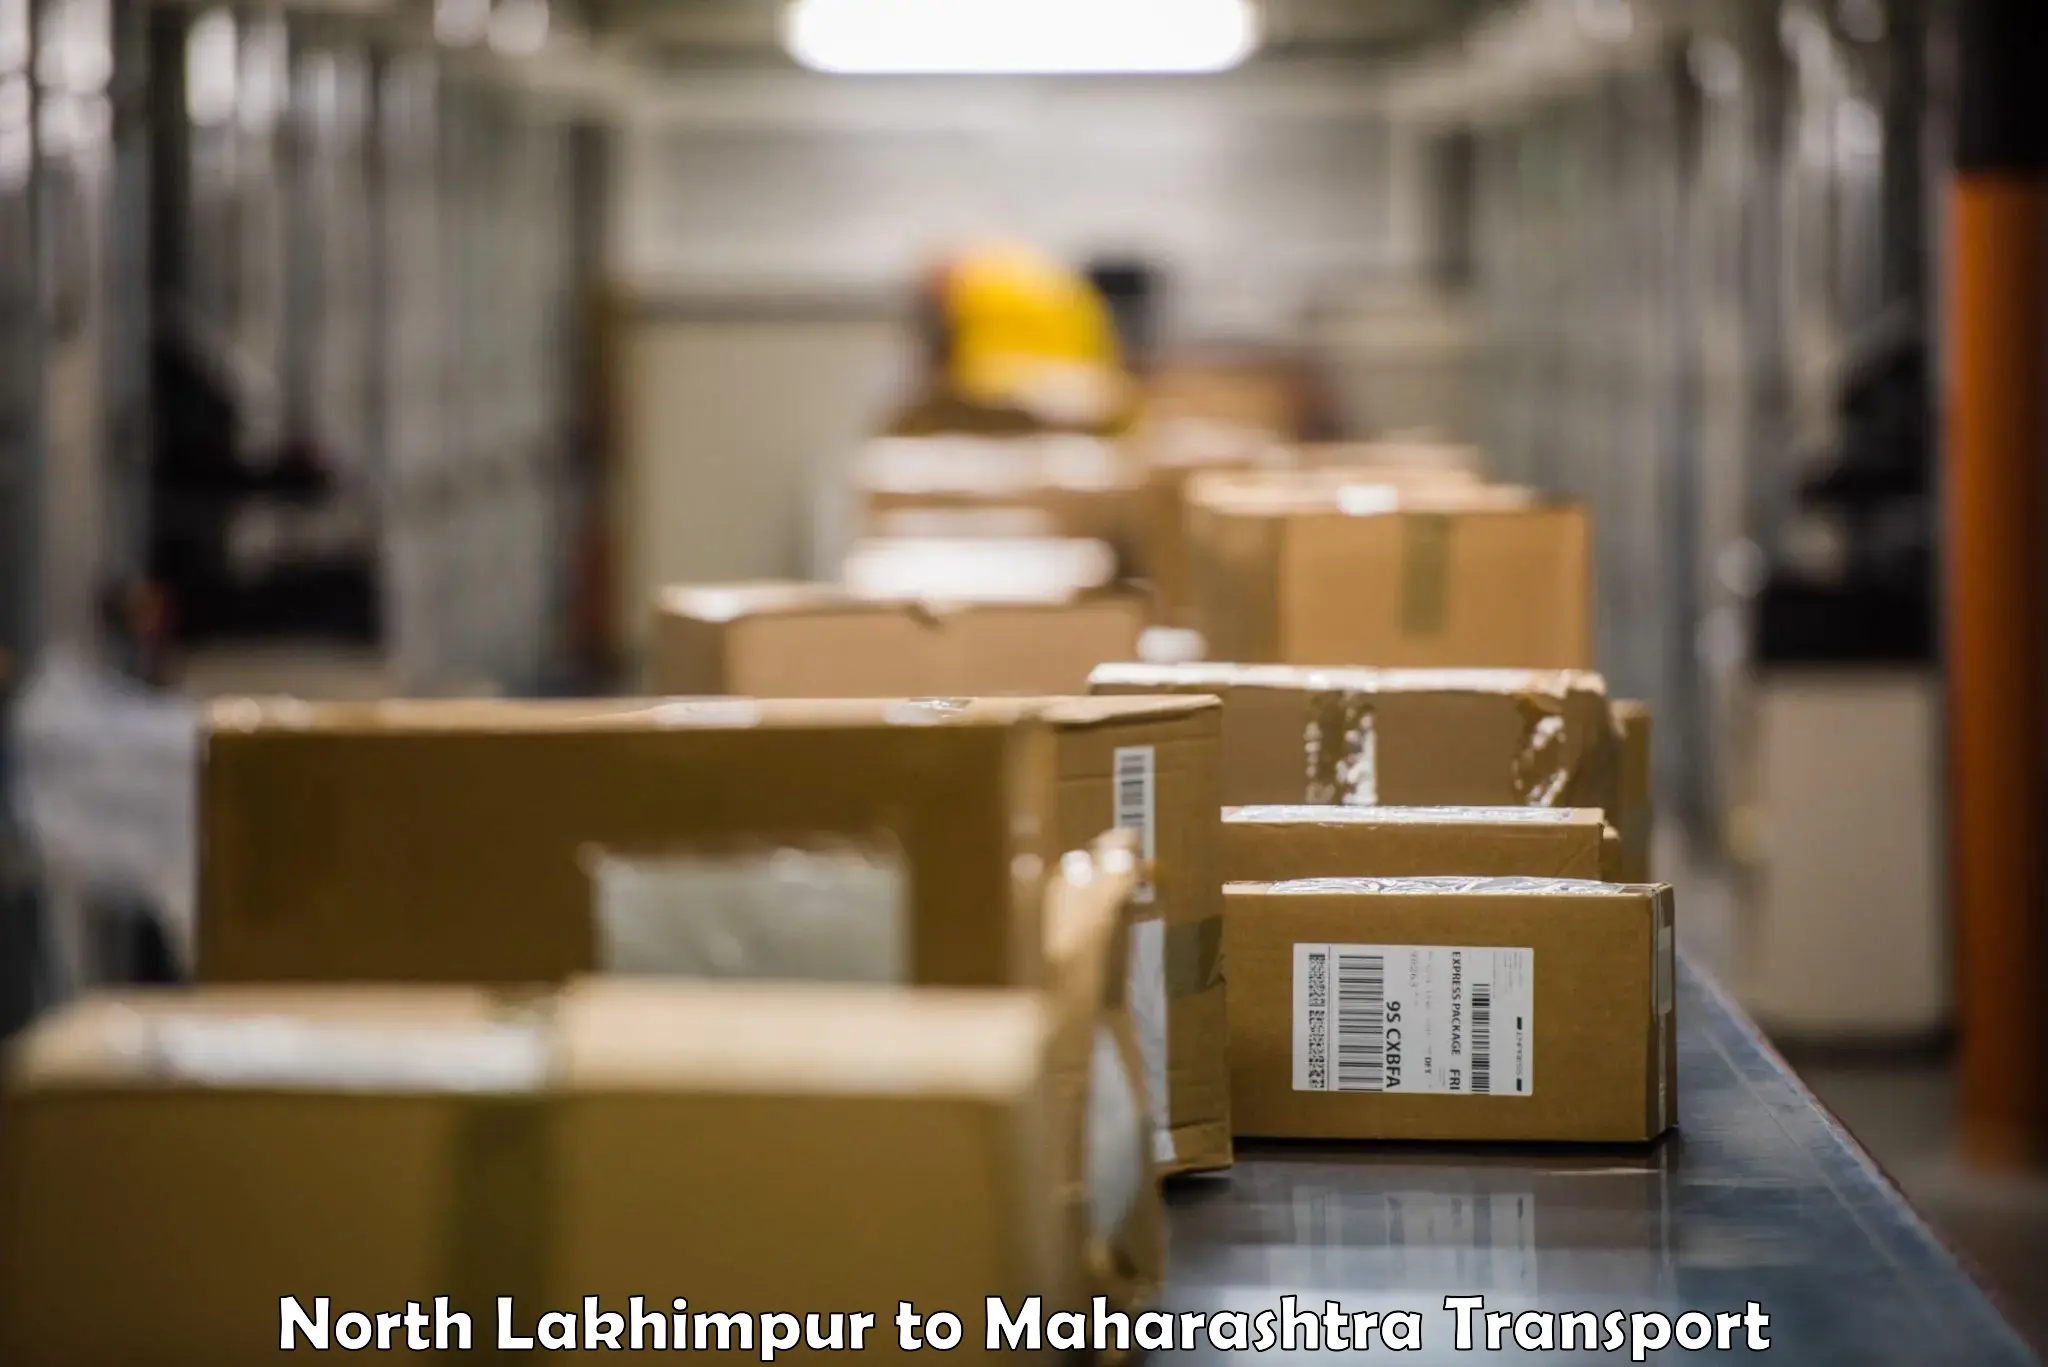 Daily parcel service transport North Lakhimpur to Lonavala